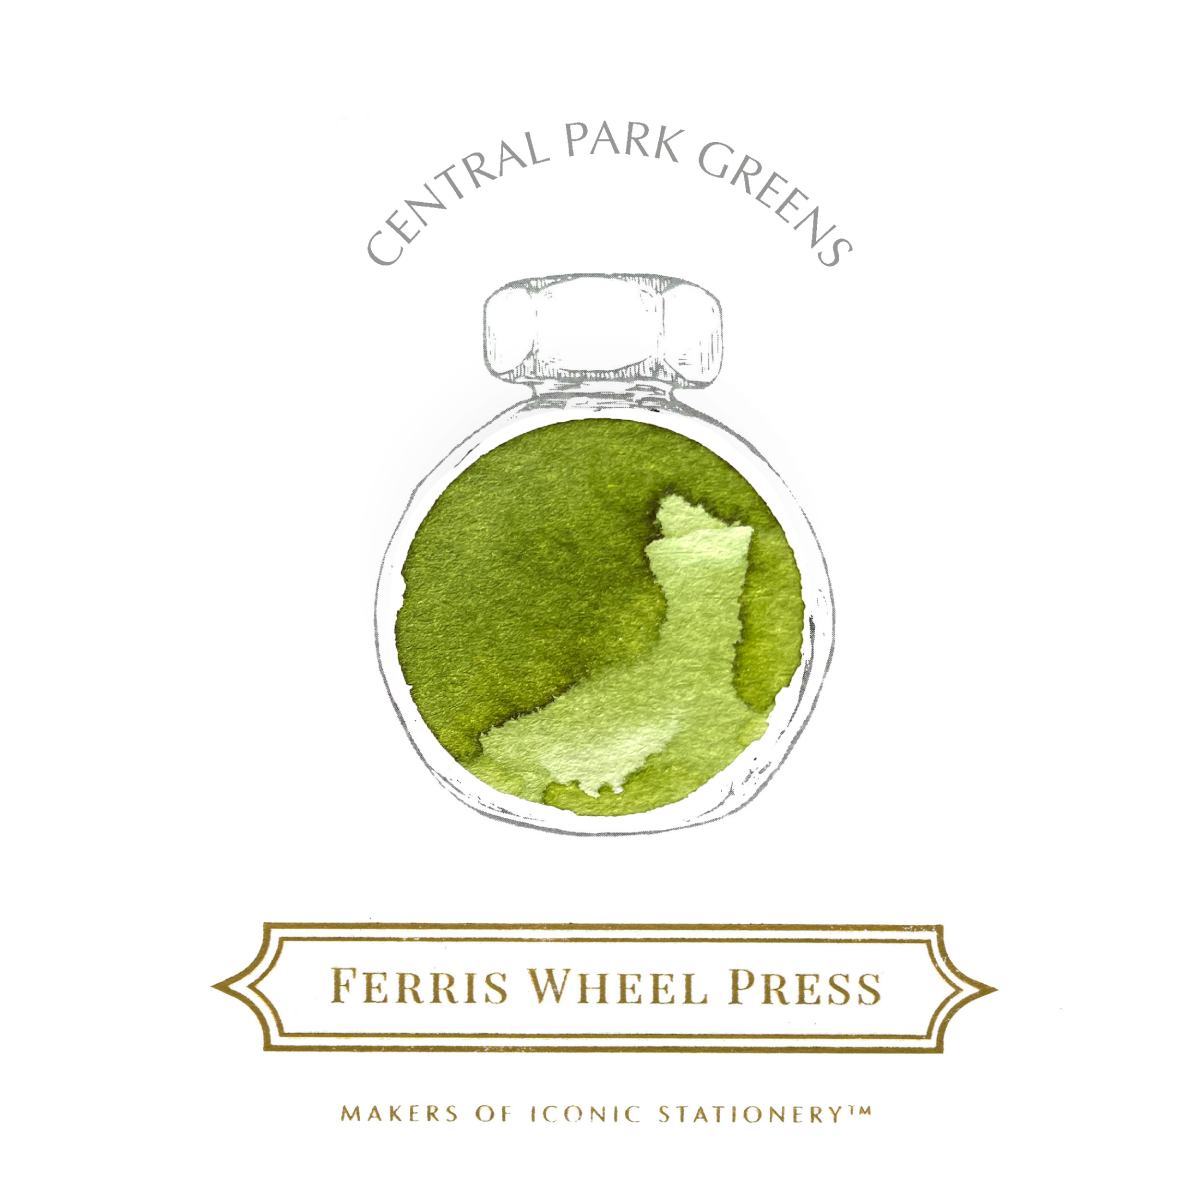 Ferris Wheel Press - Central Park Green